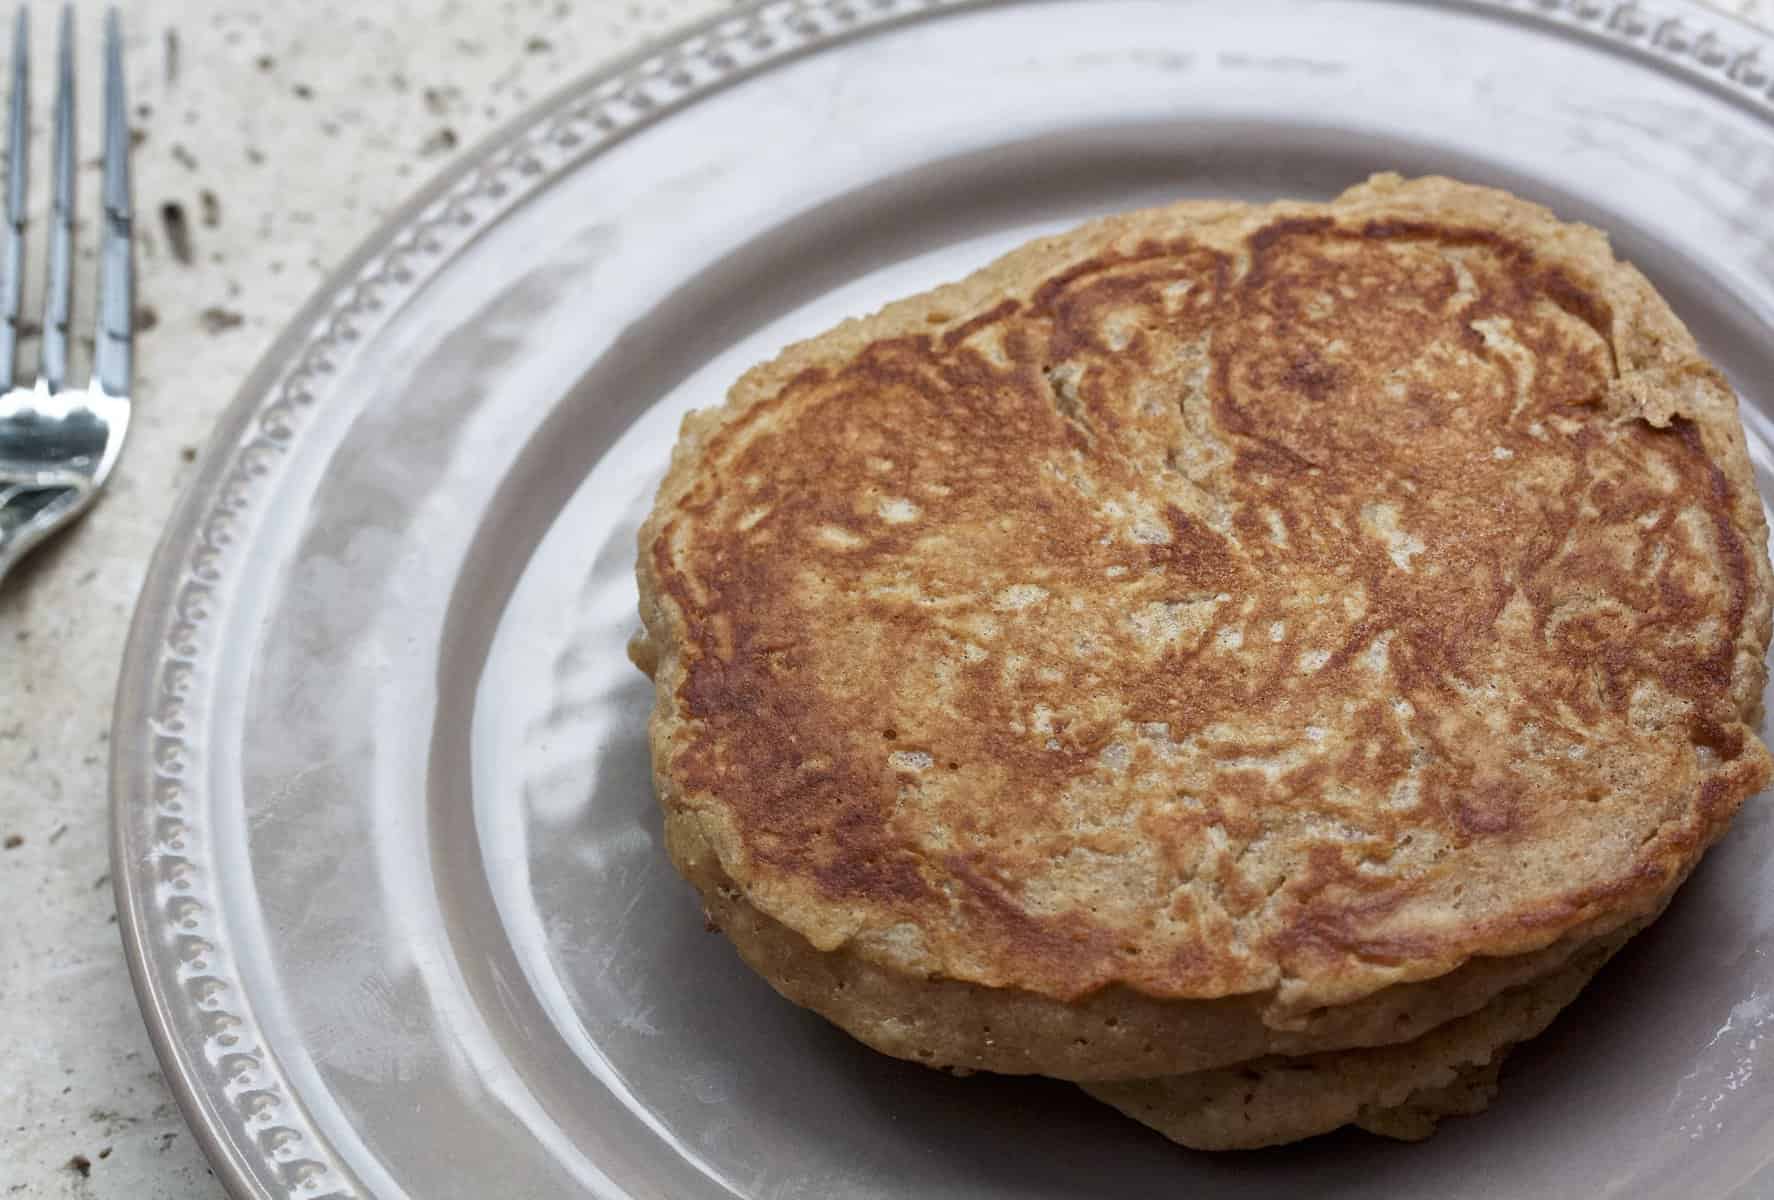 Oatmeal pancakes on a plate